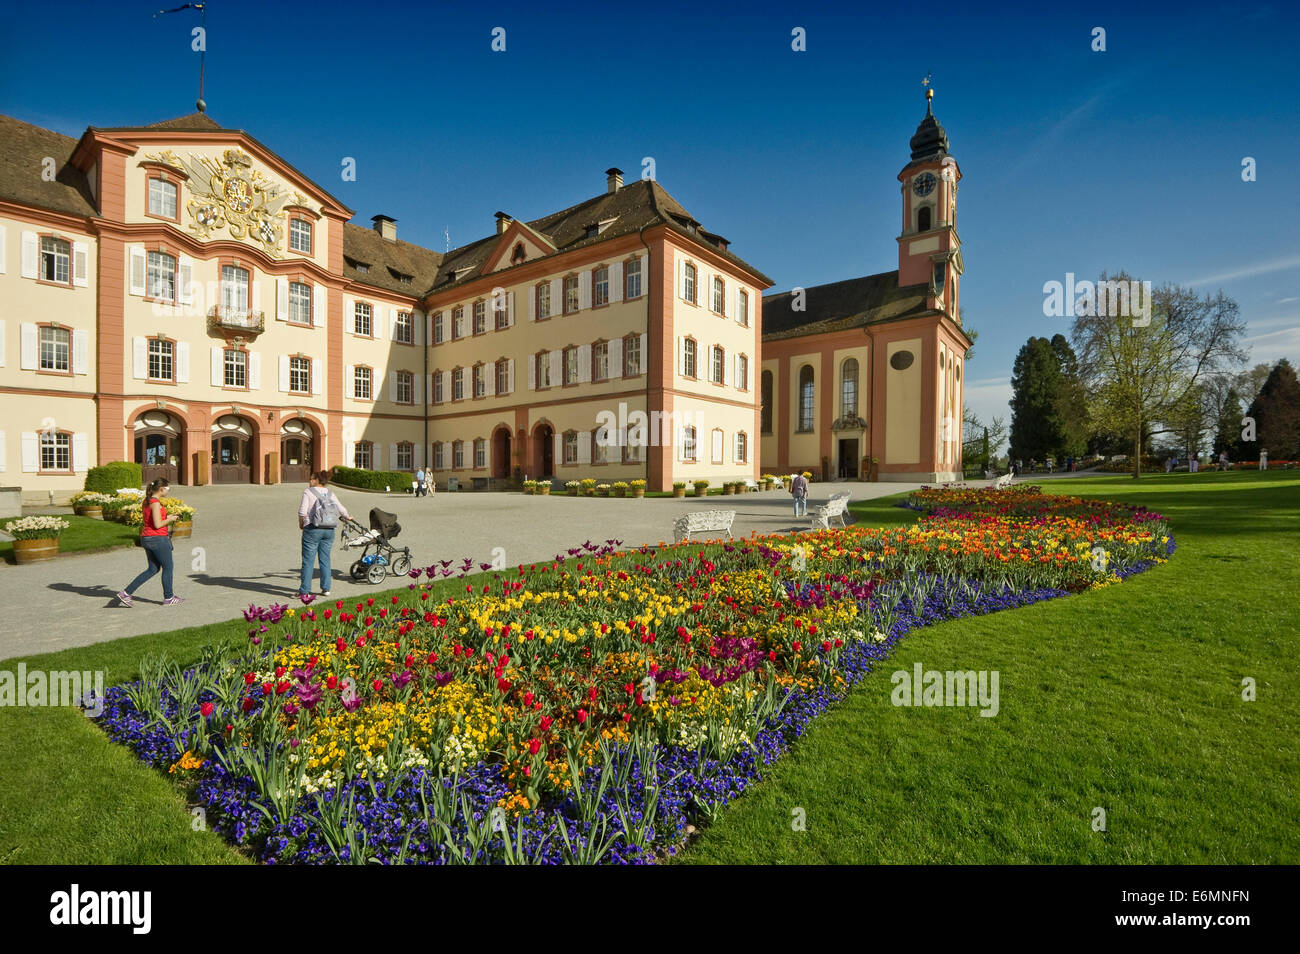 Schloss Mainau Castle with a colourful flower bed, Mainau, Baden-Württemberg, Germany Stock Photo